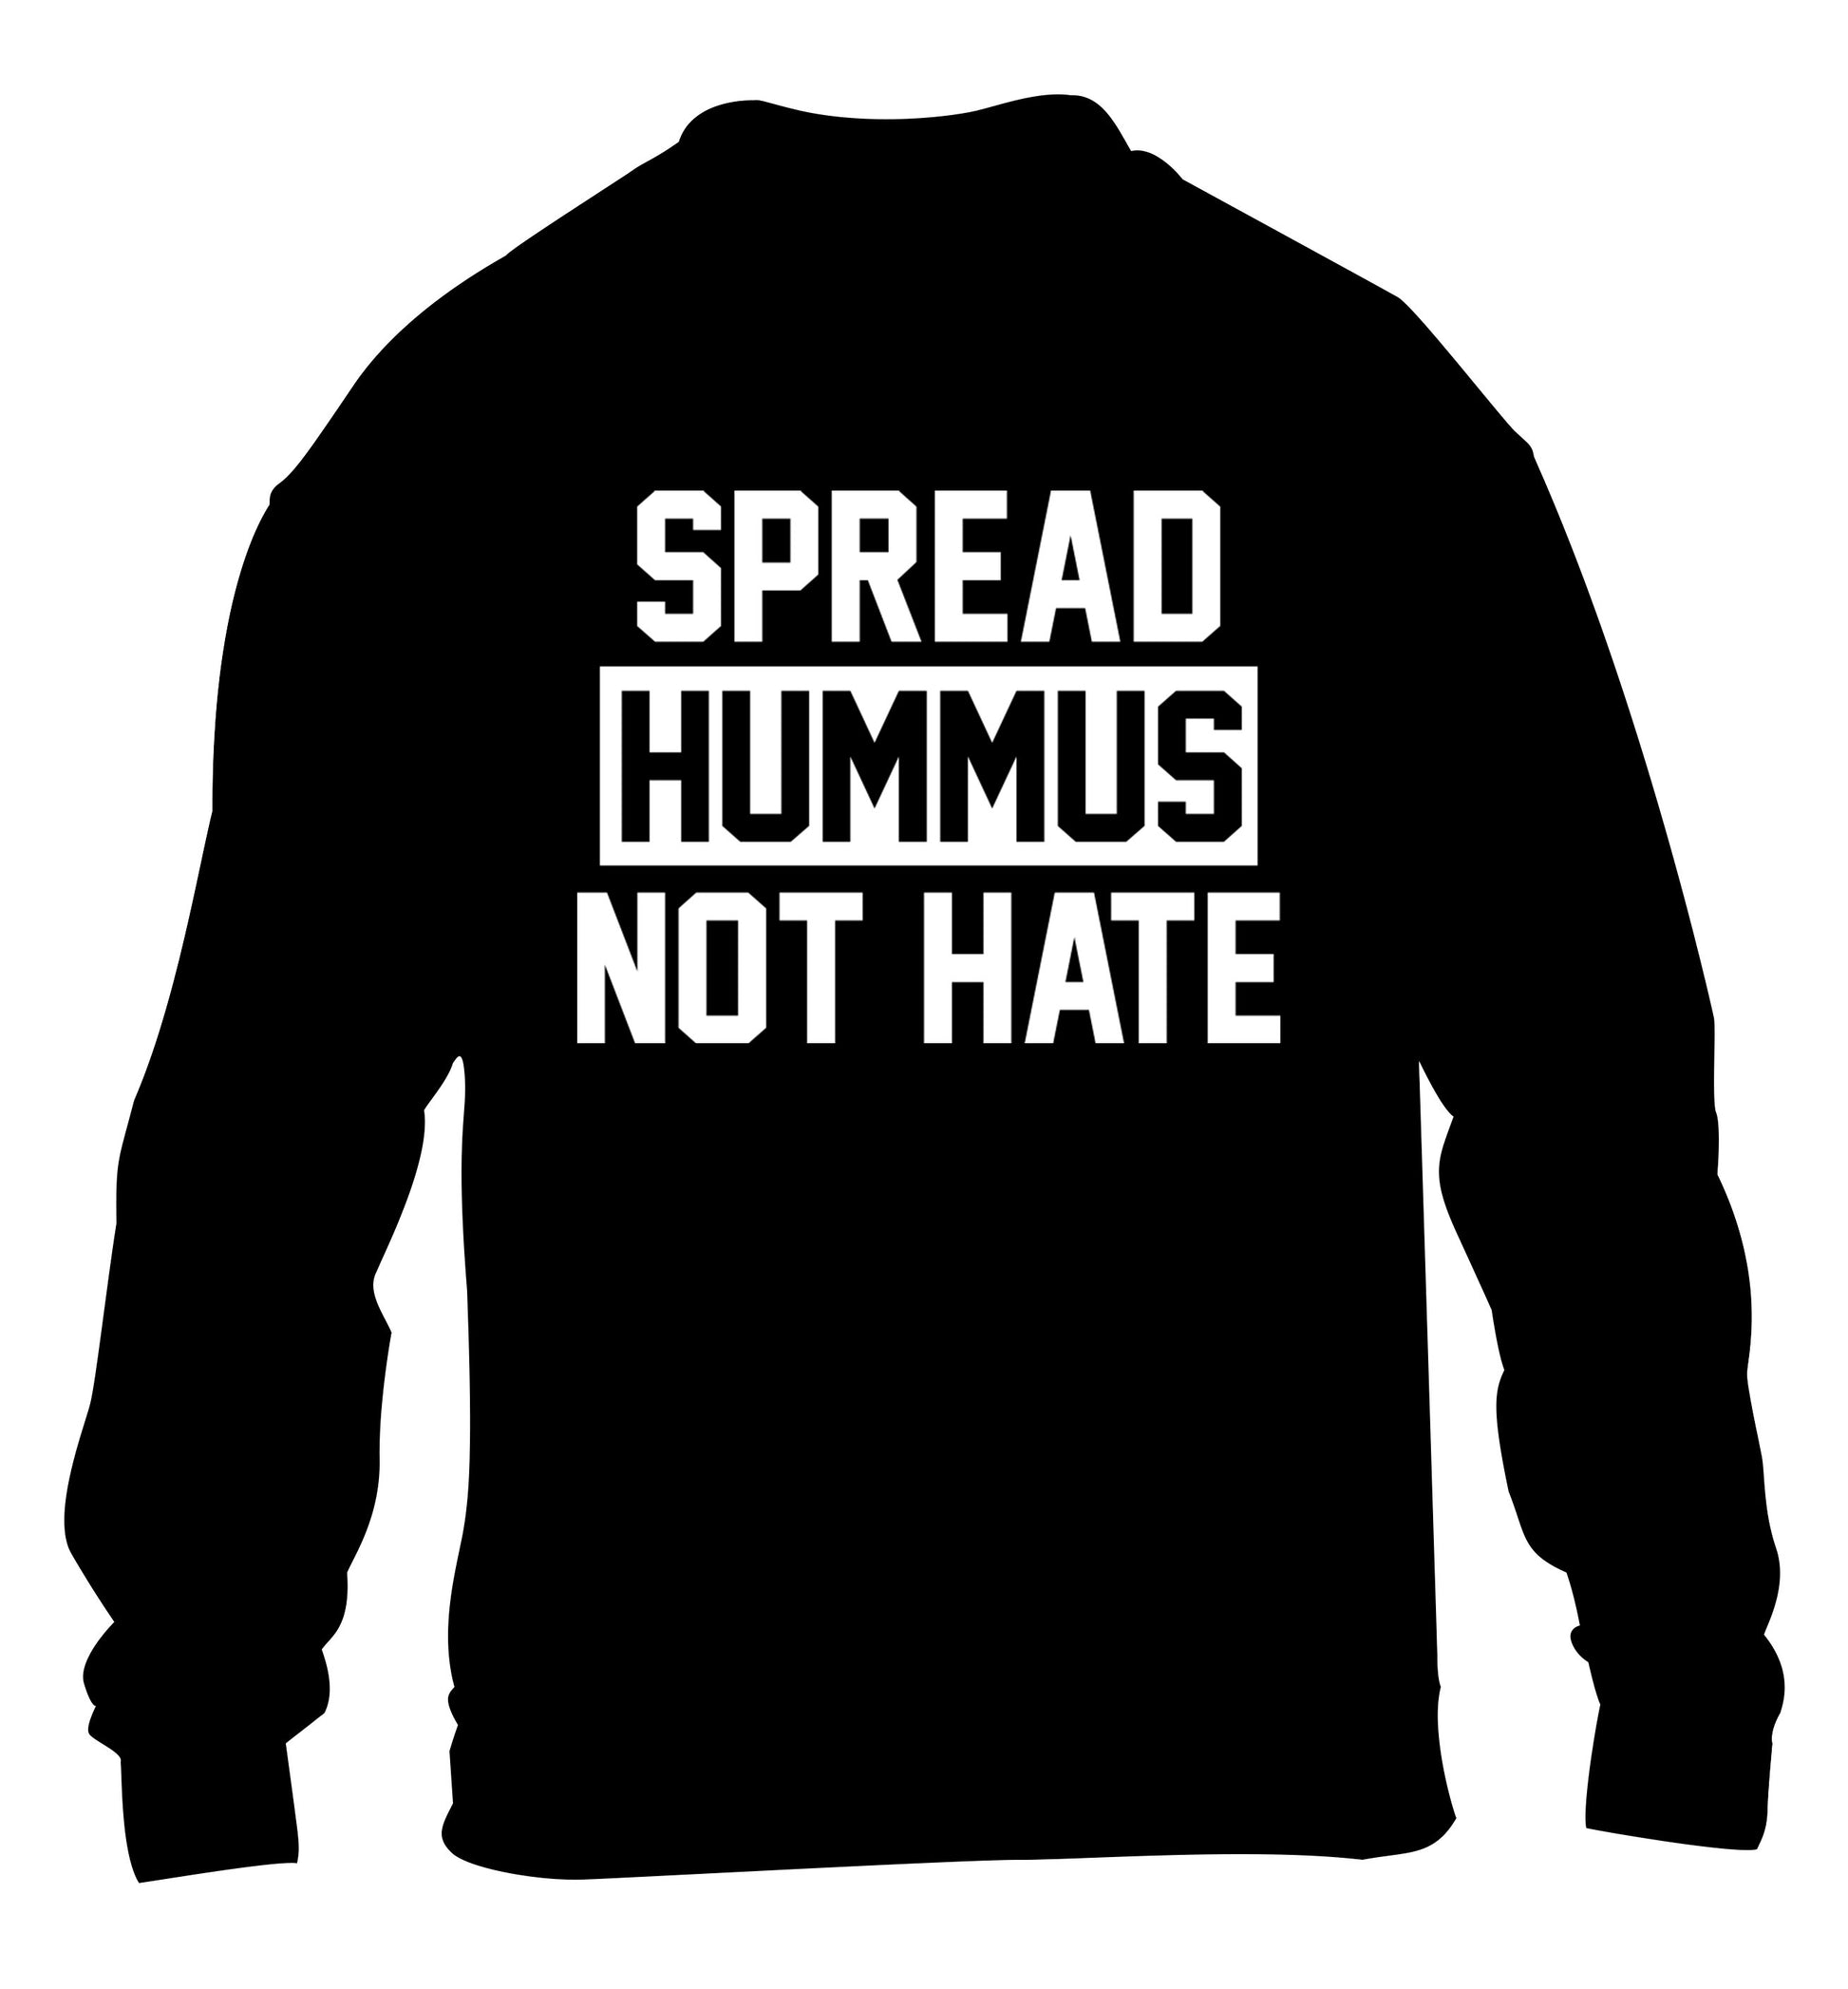 Spread hummus not hate children's black sweater 12-14 Years